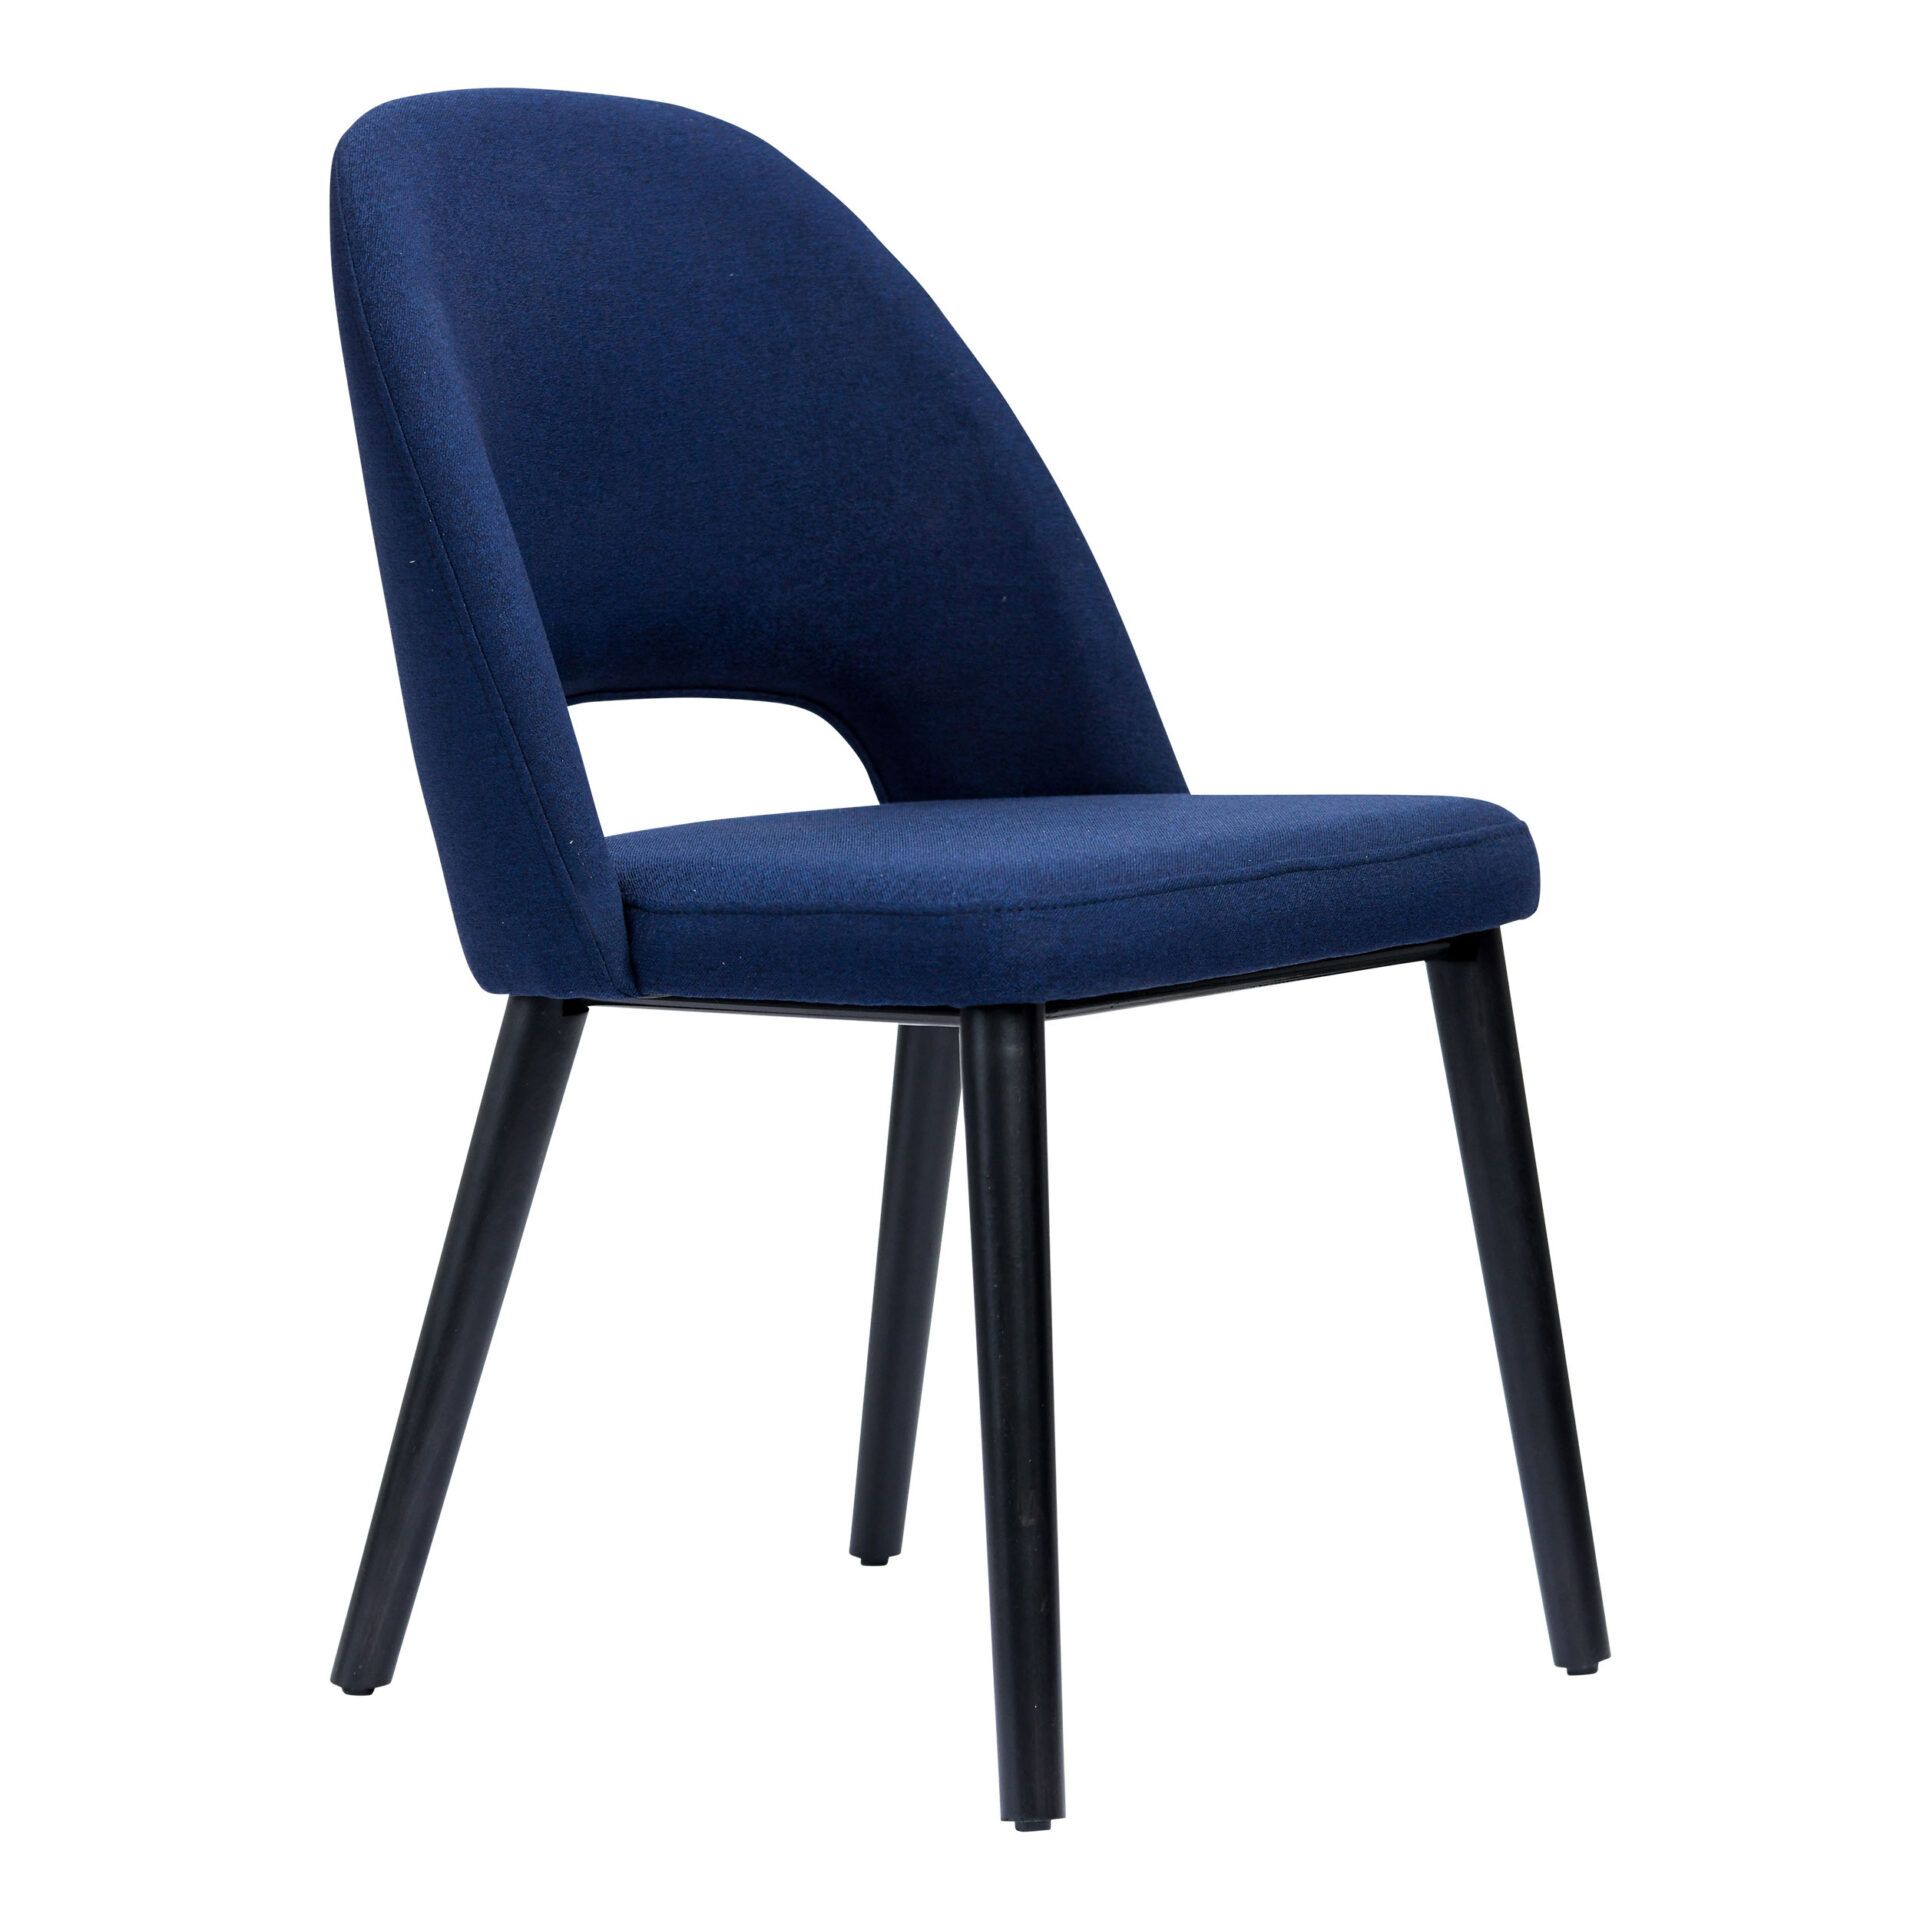 Semifreddo Chair - Black Legs/Navy Woven Fabric